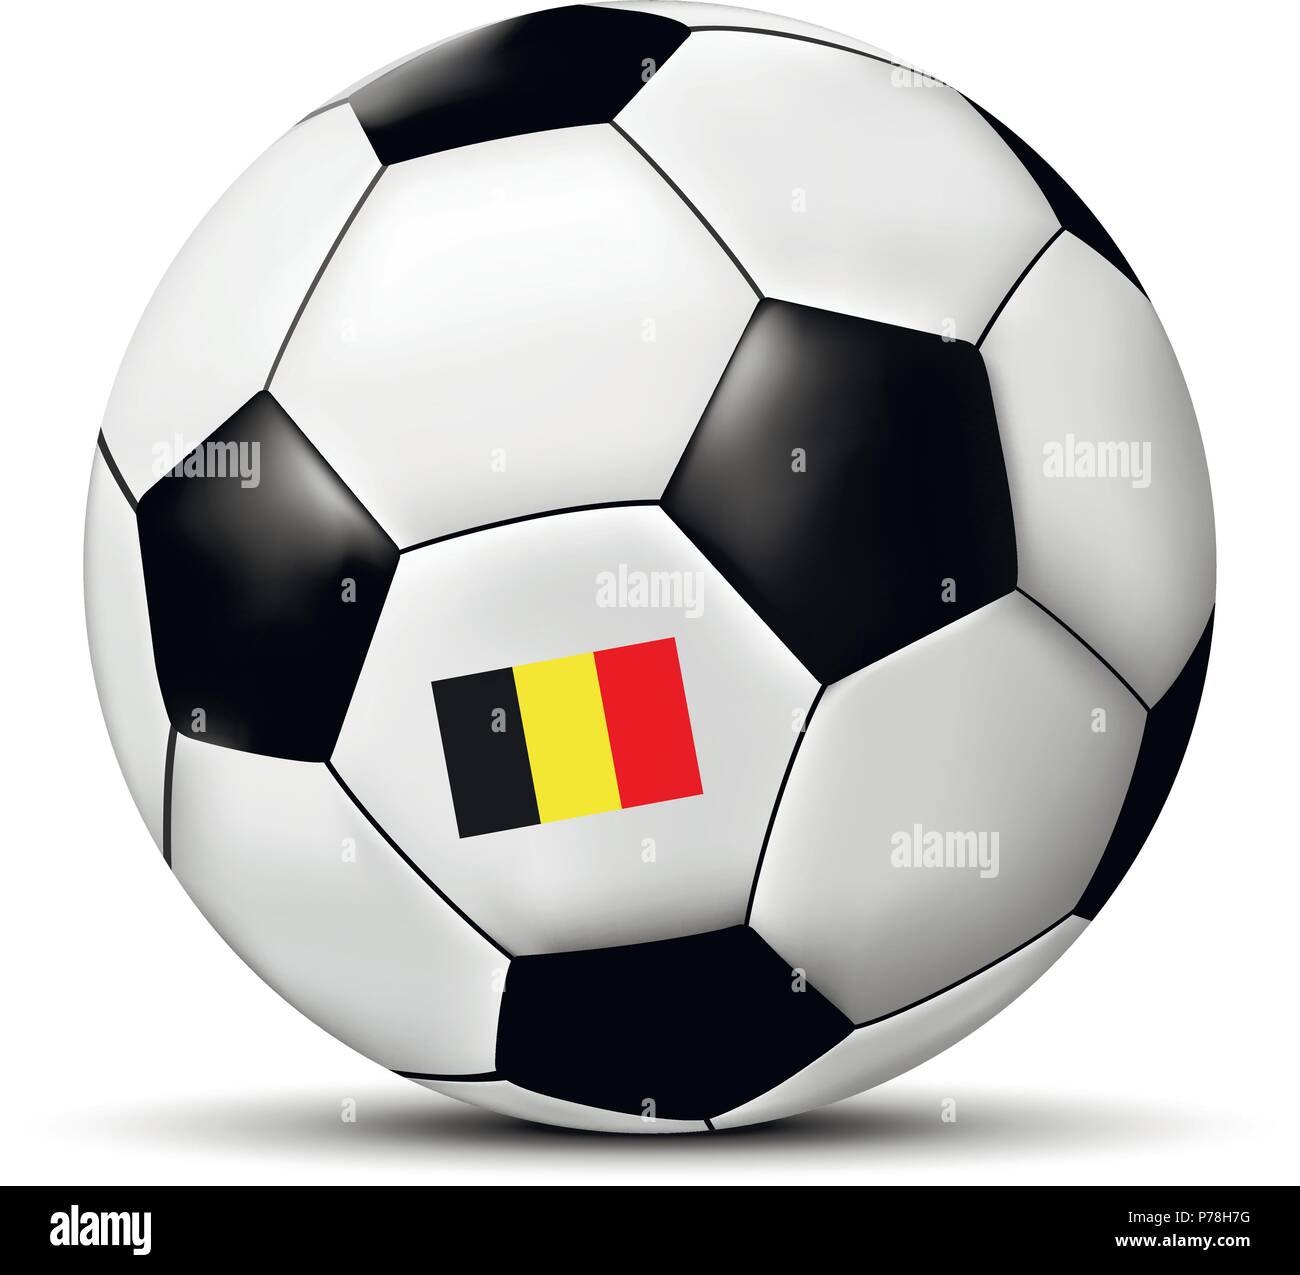 Football or soccer ball with belgium flag. Vector illustration. Stock Vector